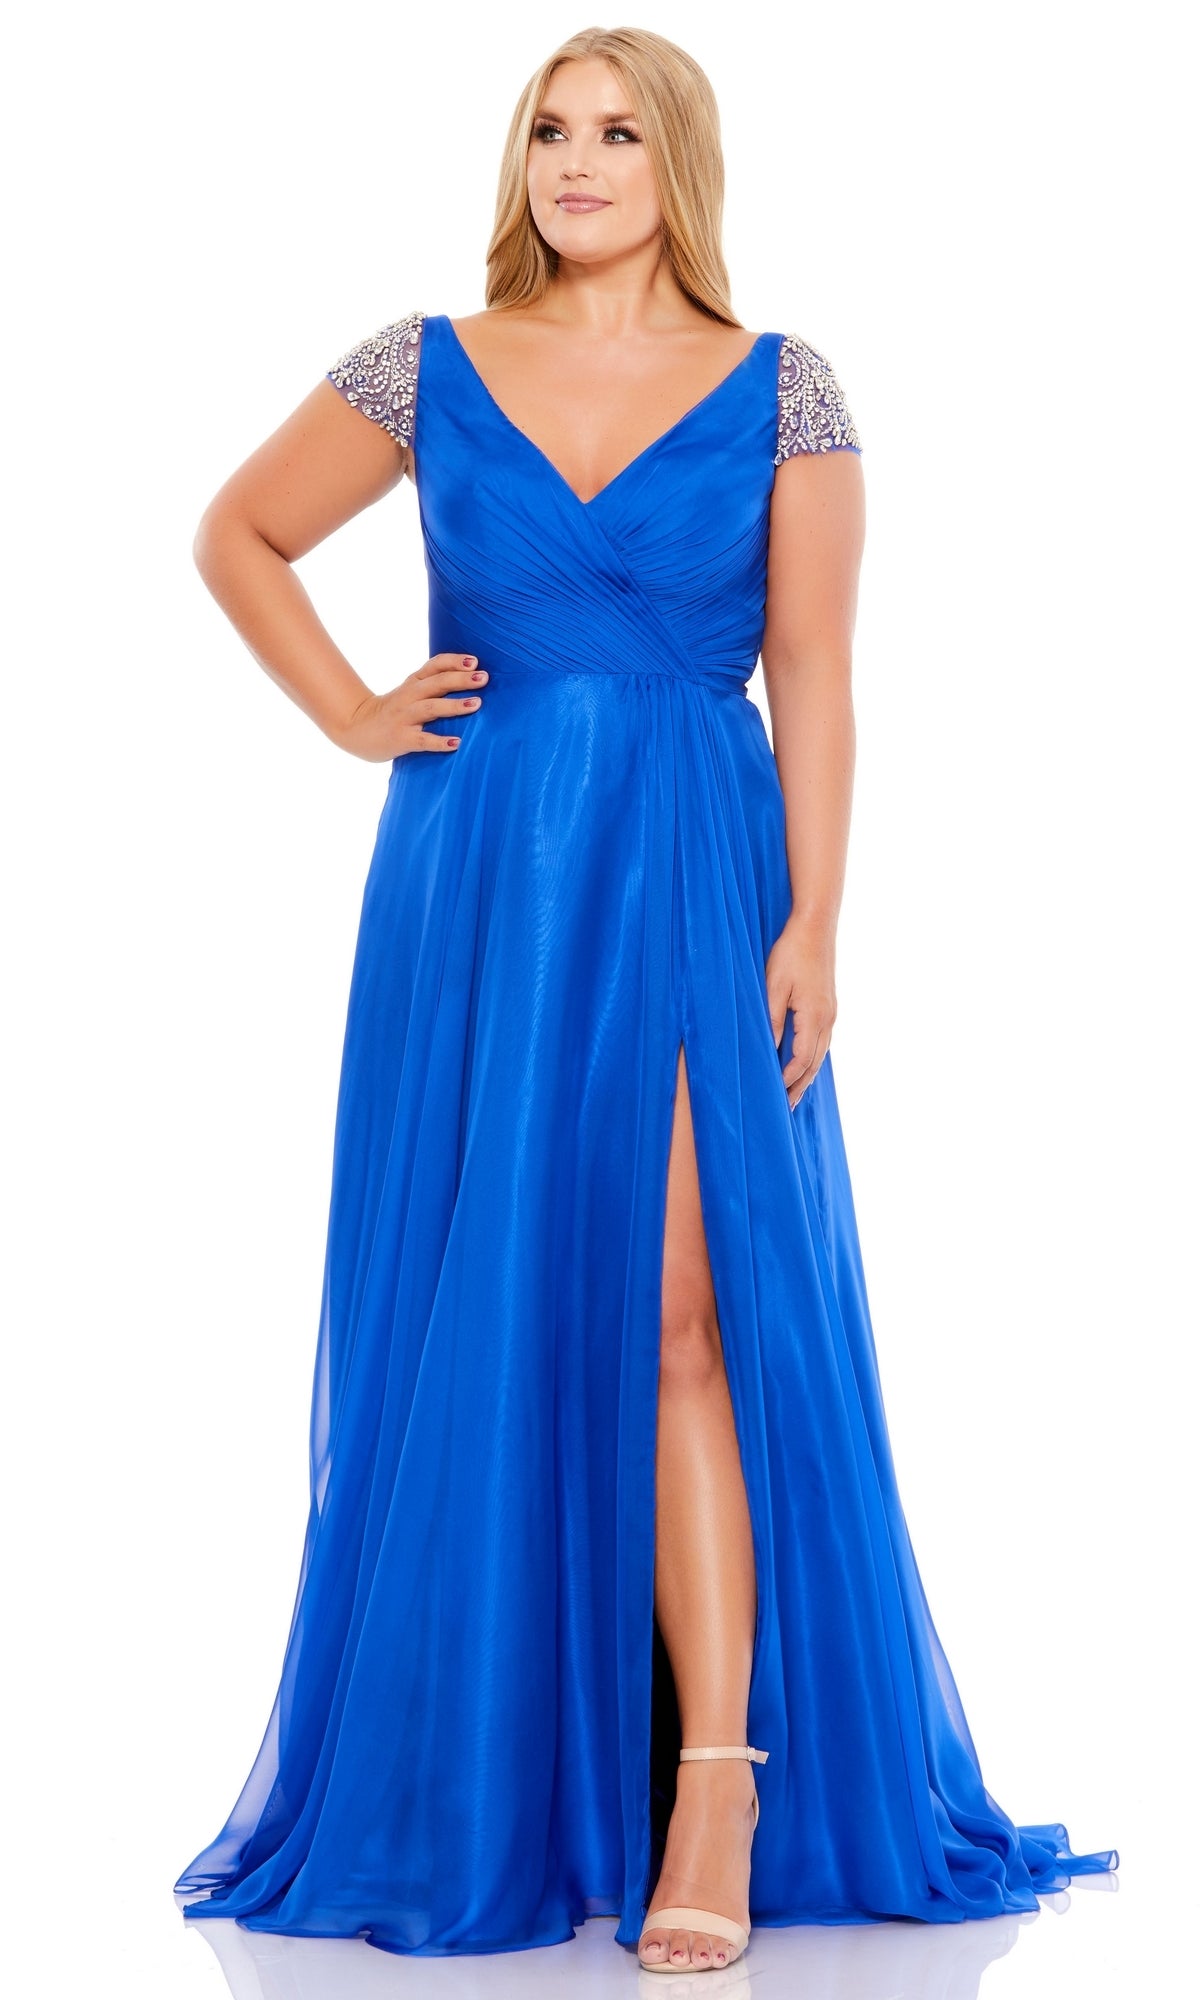 Long Plus-Size Formal Dress 67723 by Mac Duggal